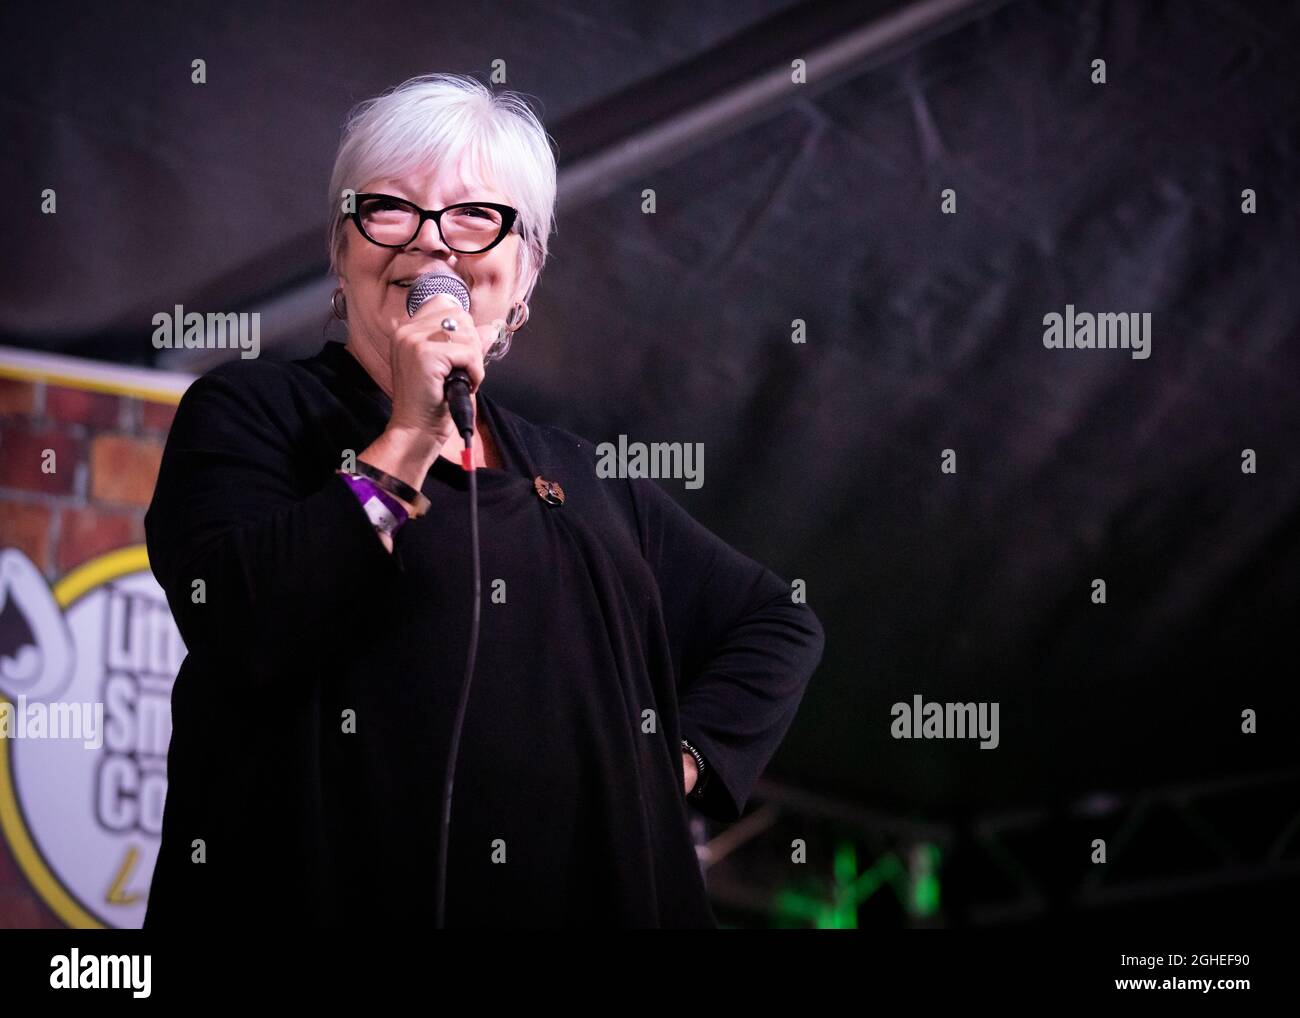 Janet Garner, Comedian, The Garden Gatherings, Comedy Gala, Essex ©  Clarissa Debenham / Alamy Stockfotografie - Alamy